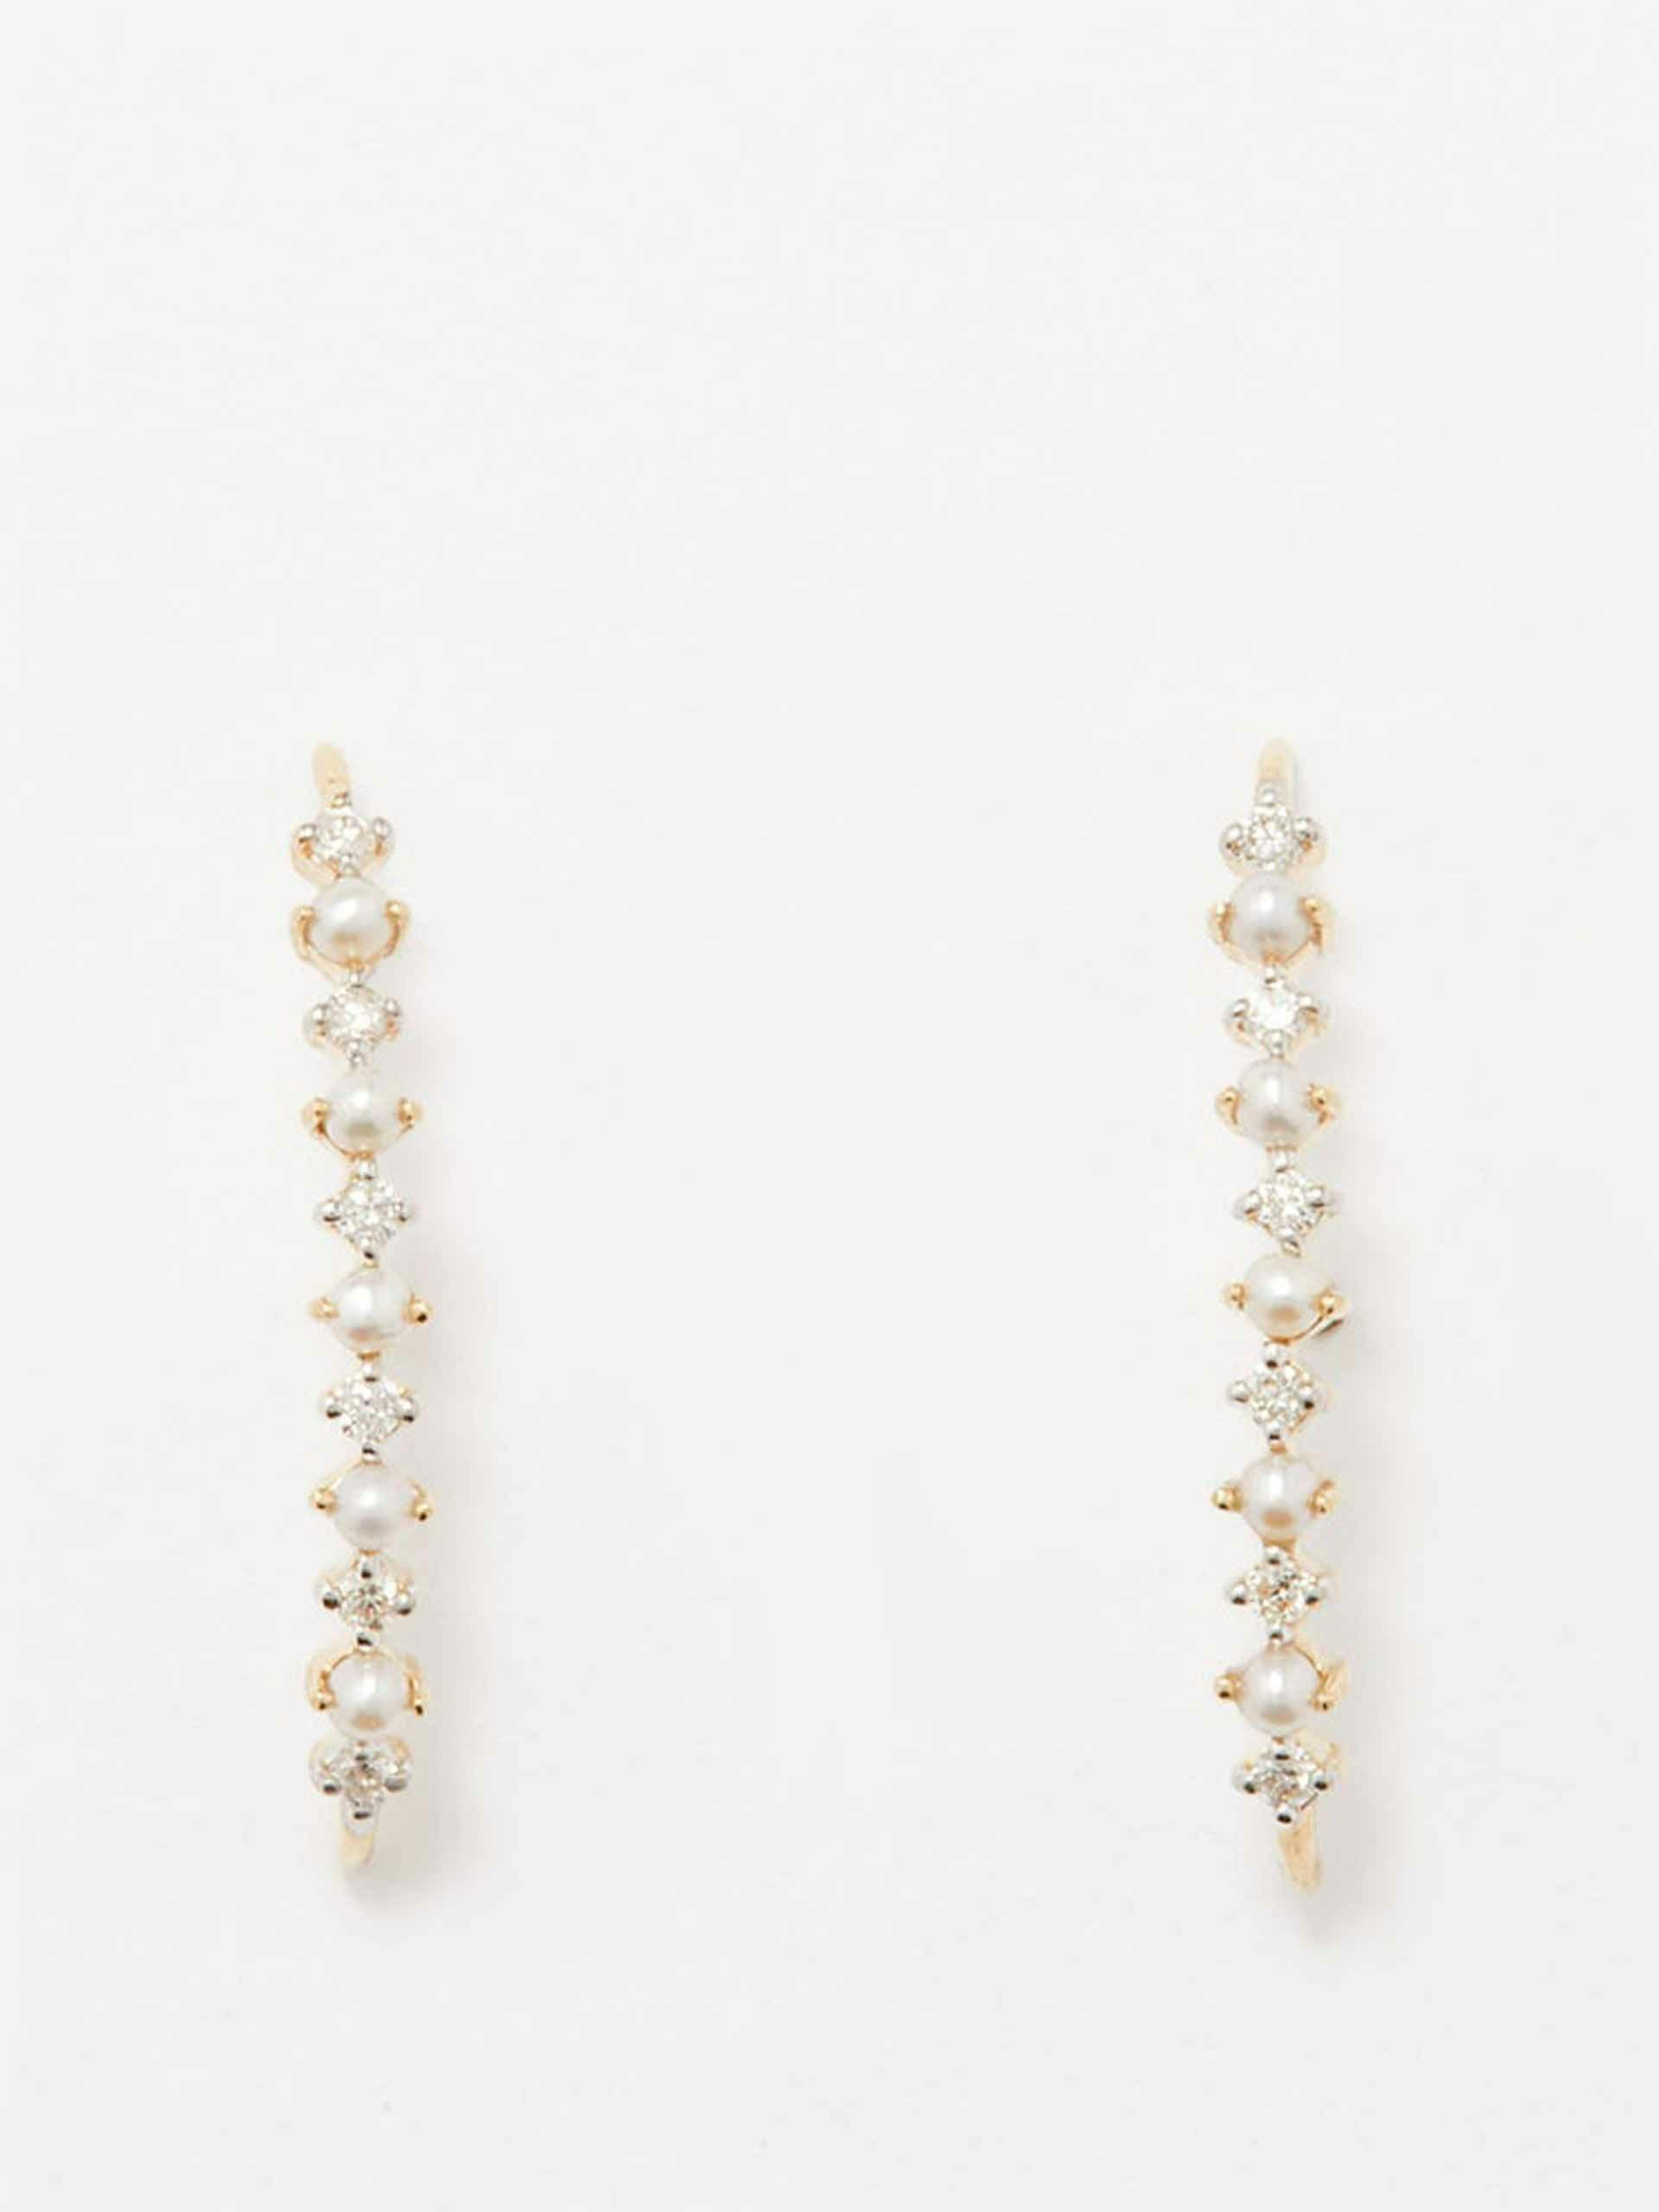 The Little Things diamond, pearl & gold earrings